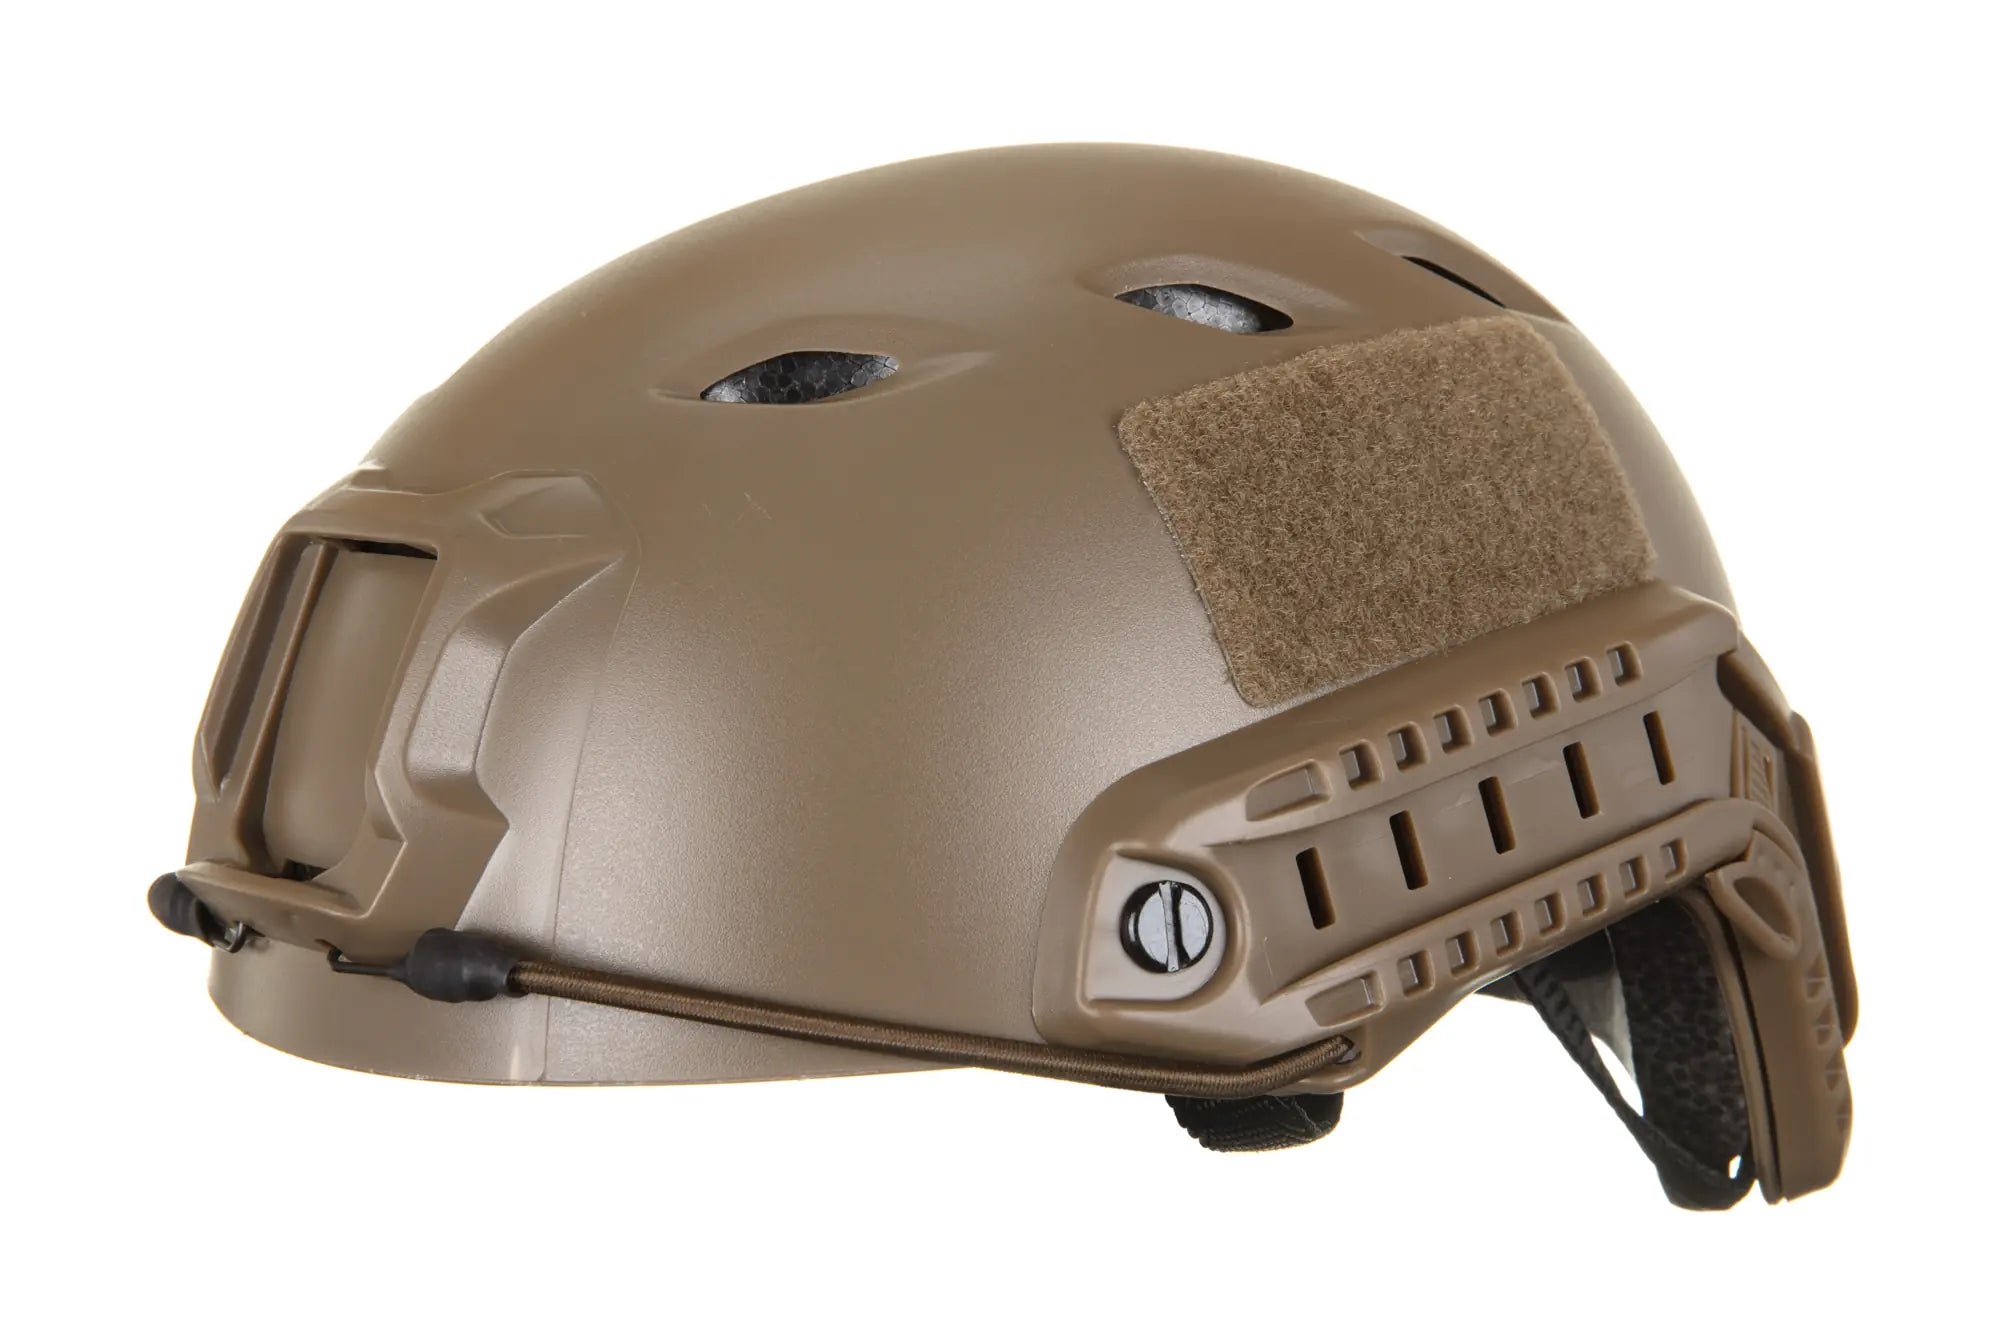 Replica of Emerson Gear FAST type BJ Eco Dark Earth helmet